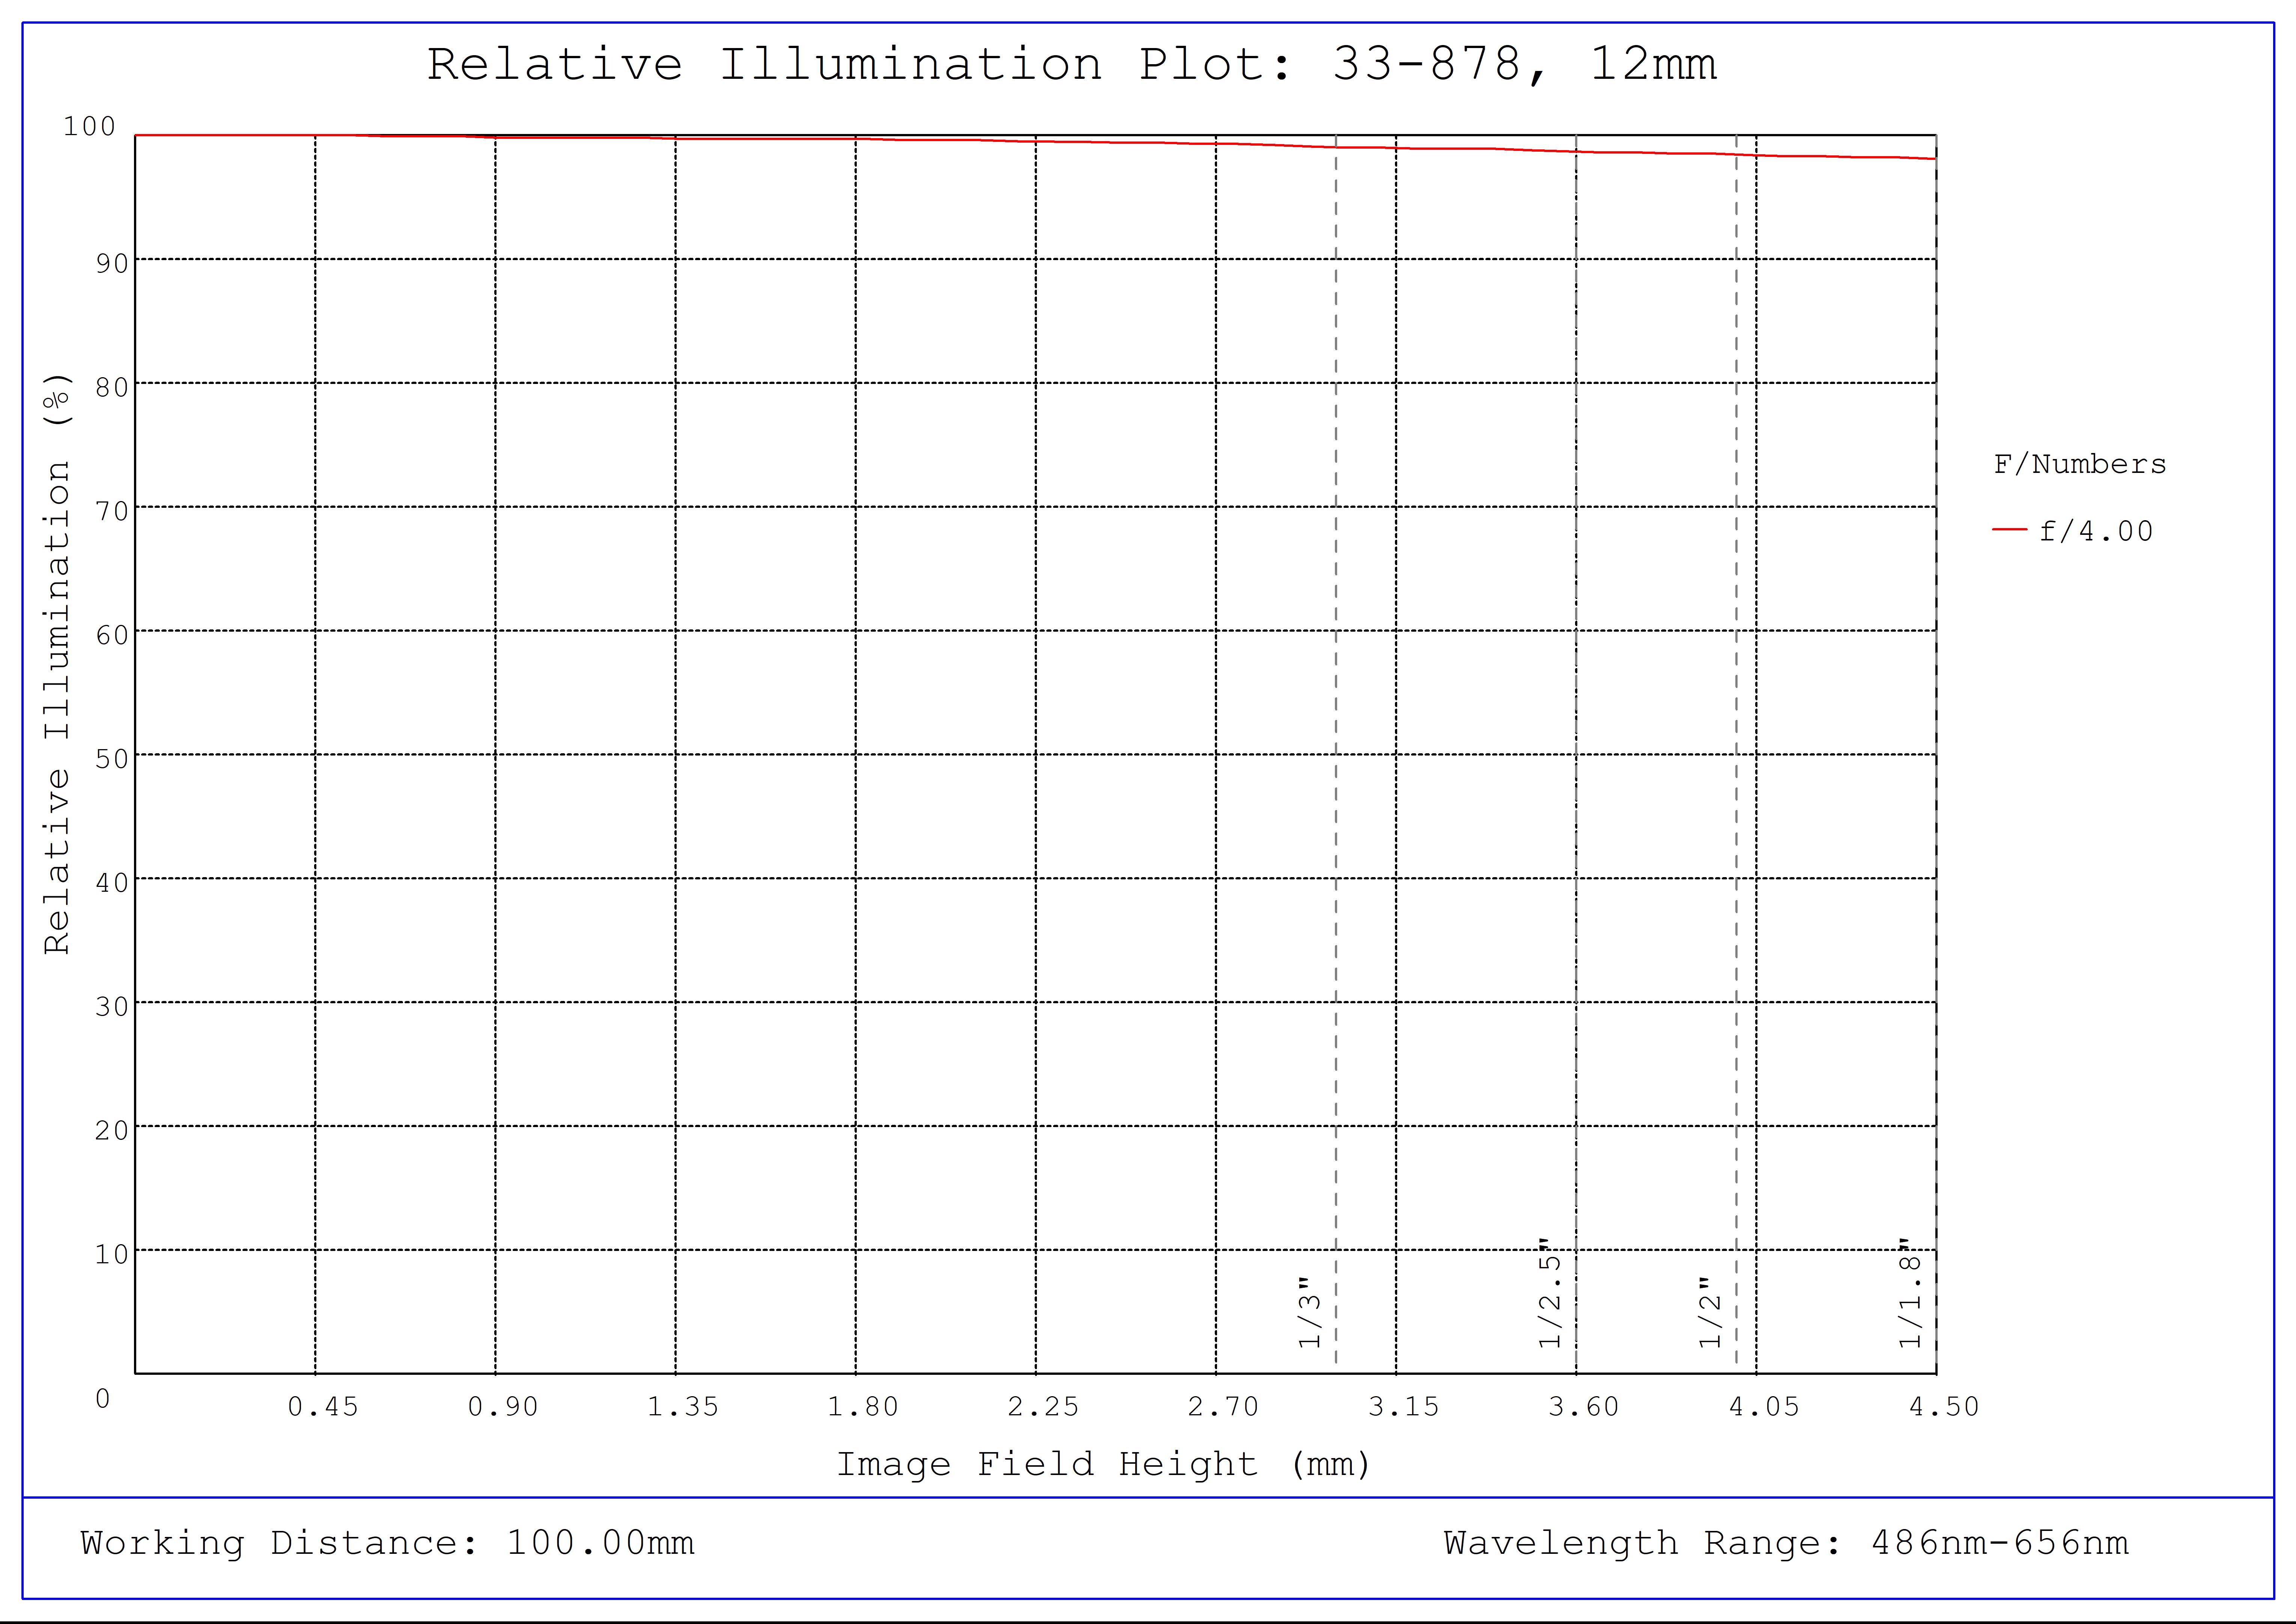 #33-878, 12mm, f/4 UCi Series Fixed Focal Length Lens, Relative Illumination Plot